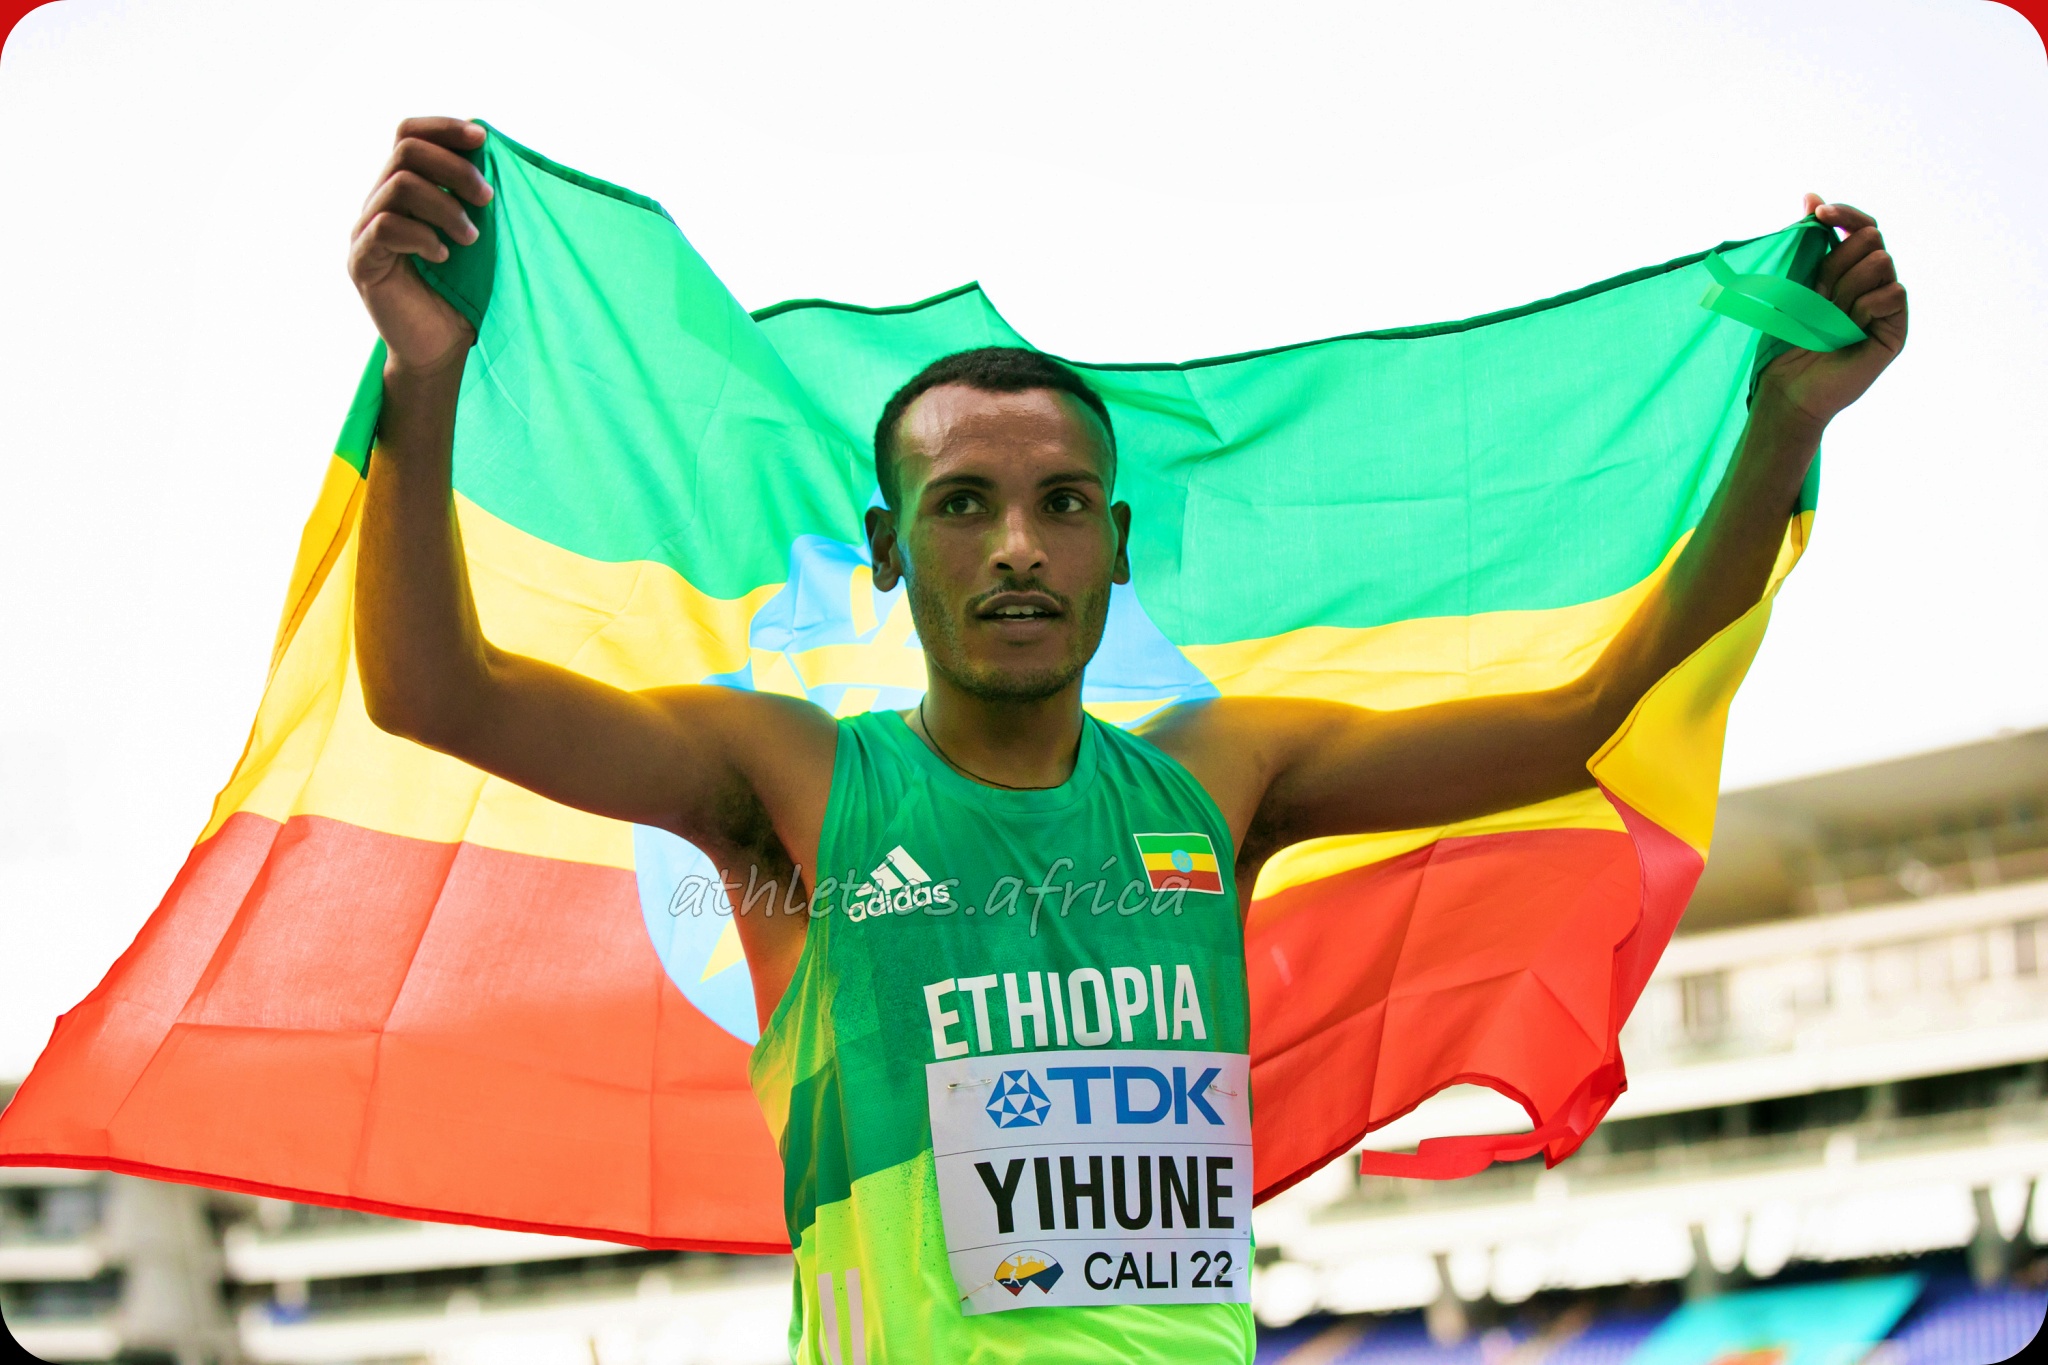 Ethiopia's Addisu Yihune wins the men's 5000m at the World Athletics U20 Championships Cali 22 / Photo credit: Marta Gorczynska for World Athletics